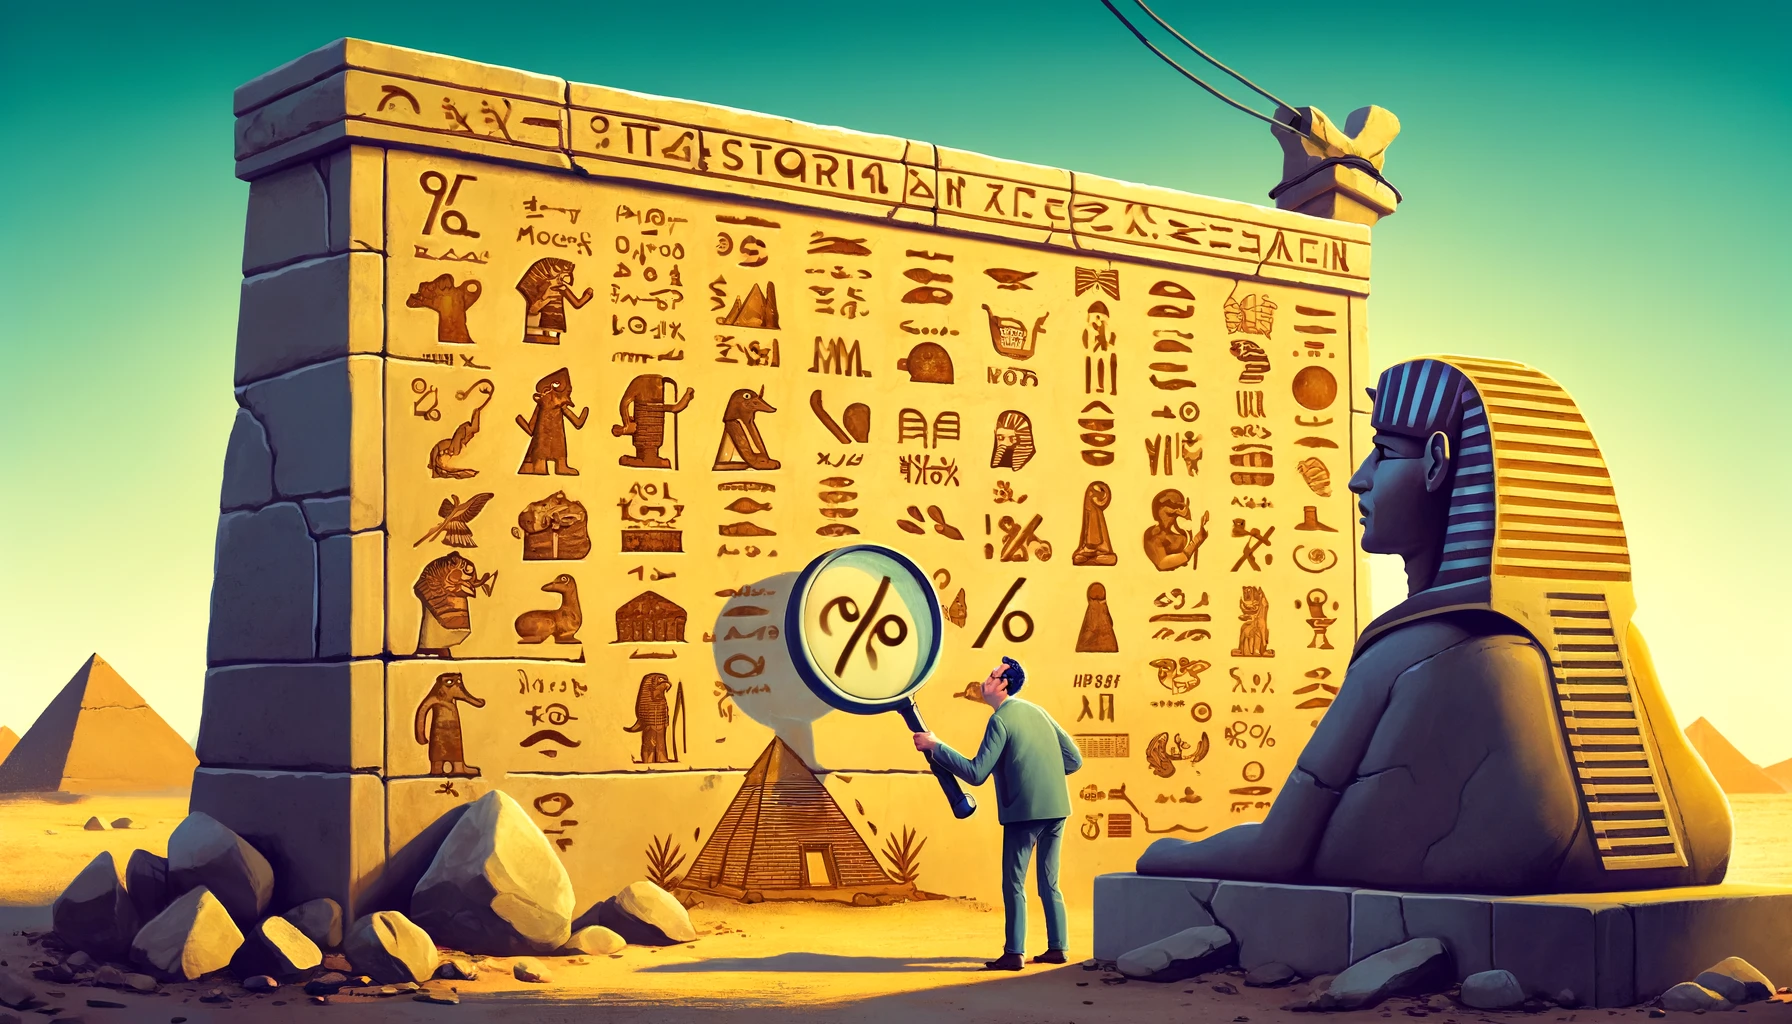 hieroglyphics-reveal-tax-complaints-csdn